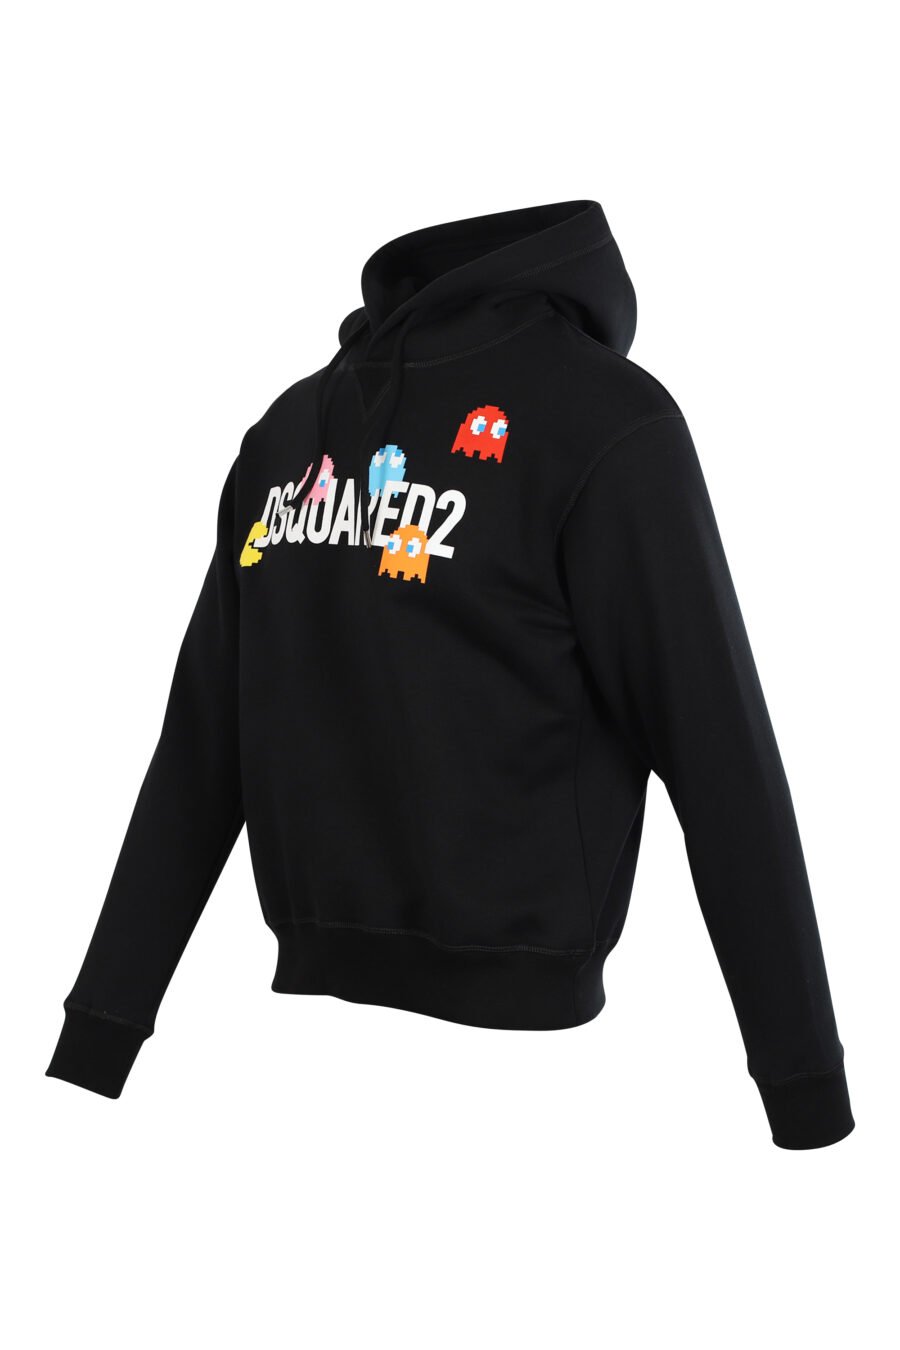 Black hooded sweatshirt with maxilogo "pac-man" - 8054148204082 2